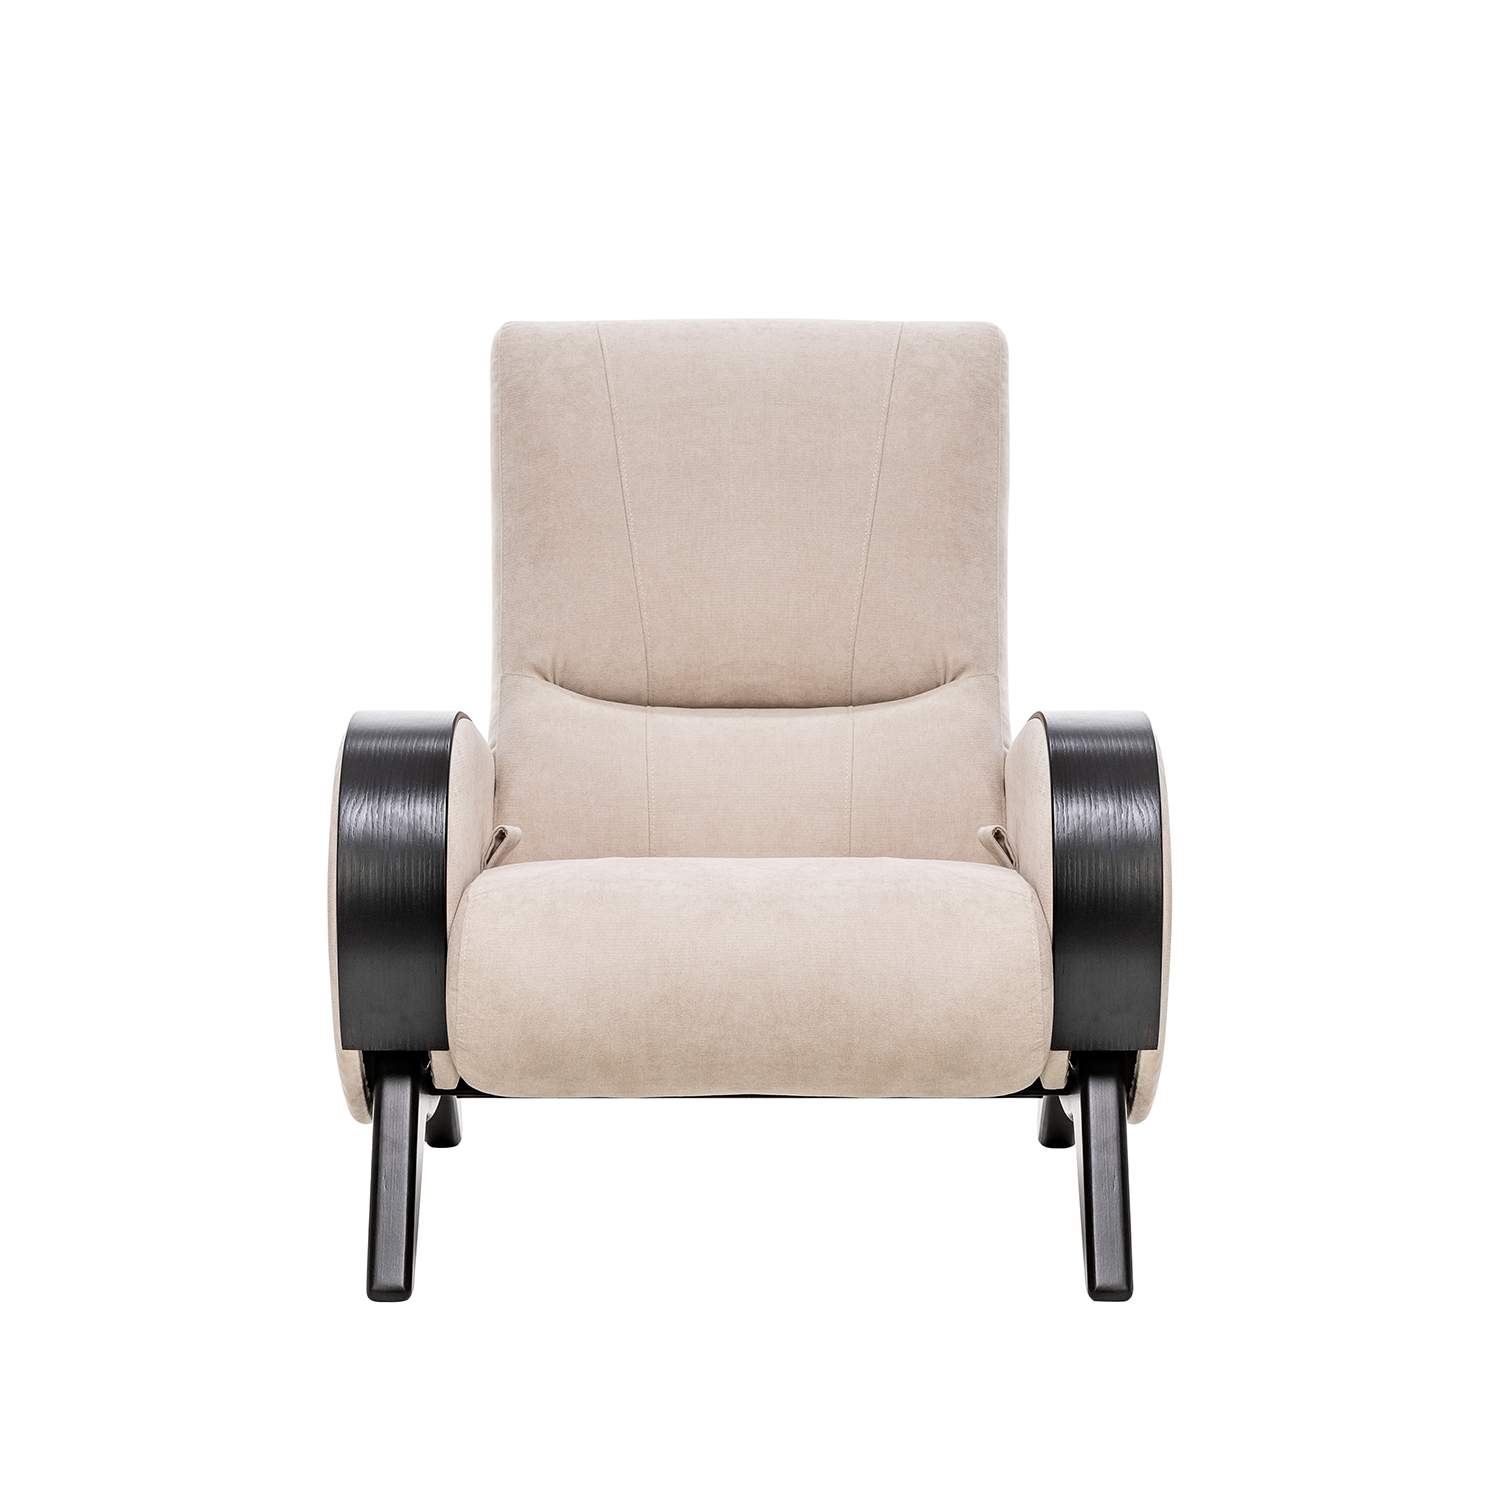 Кресло-глайдер Персона, венге, ткань Soro 21